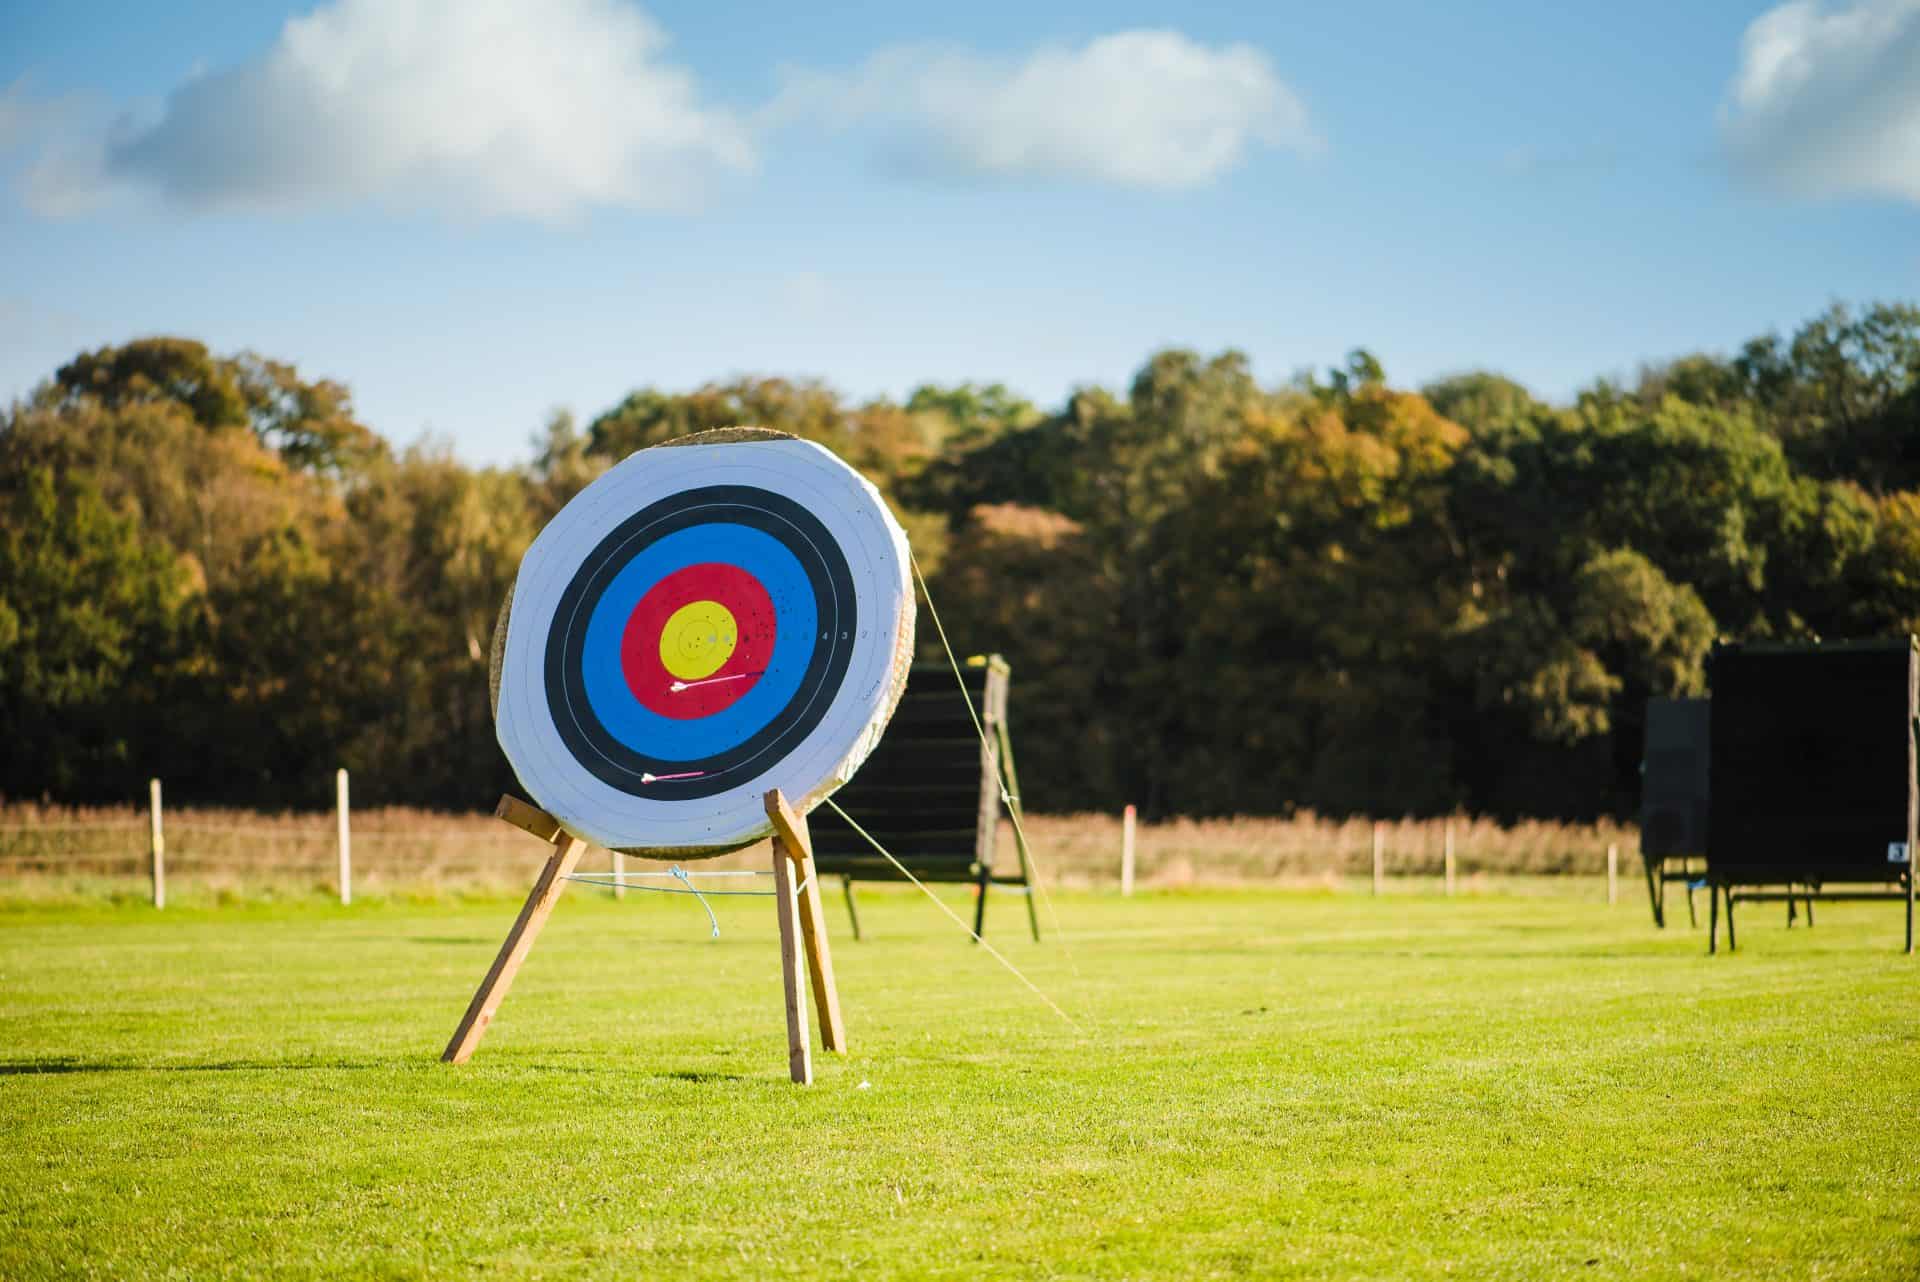 Archery GB late autumn training programme